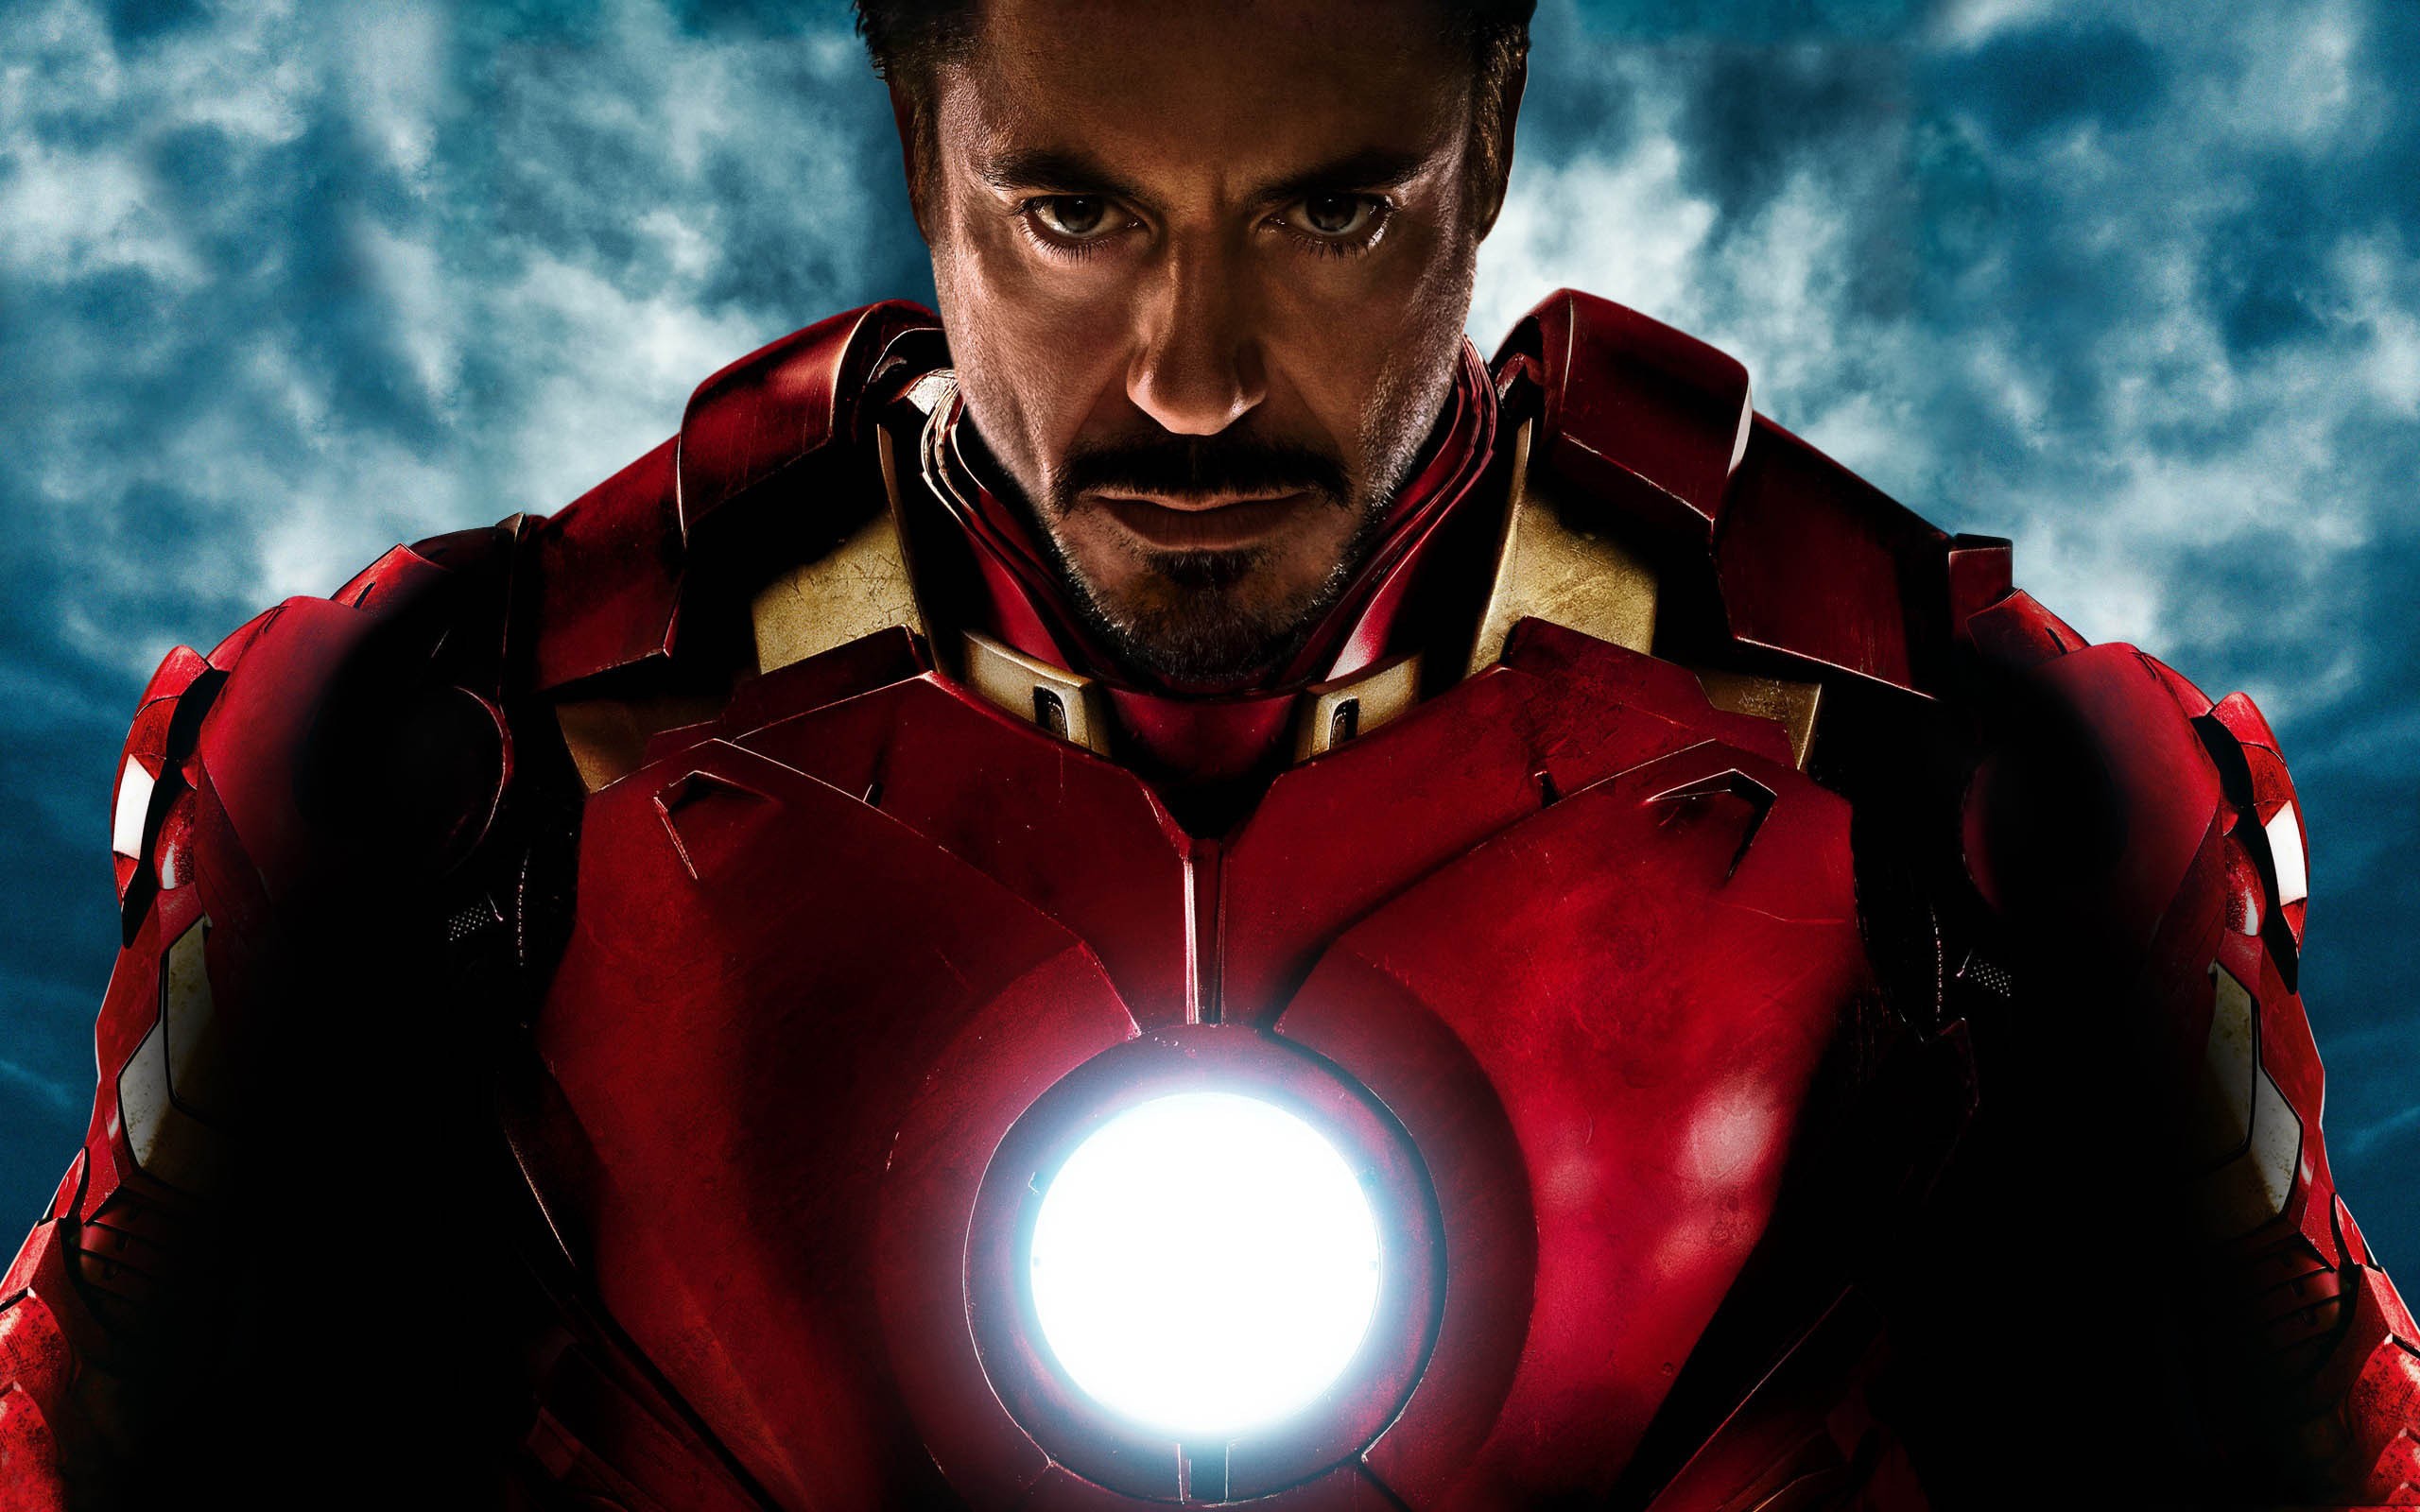 People 2560x1600 Iron Man Robert Downey Jr. Tony Stark The Avengers movies armor beard men